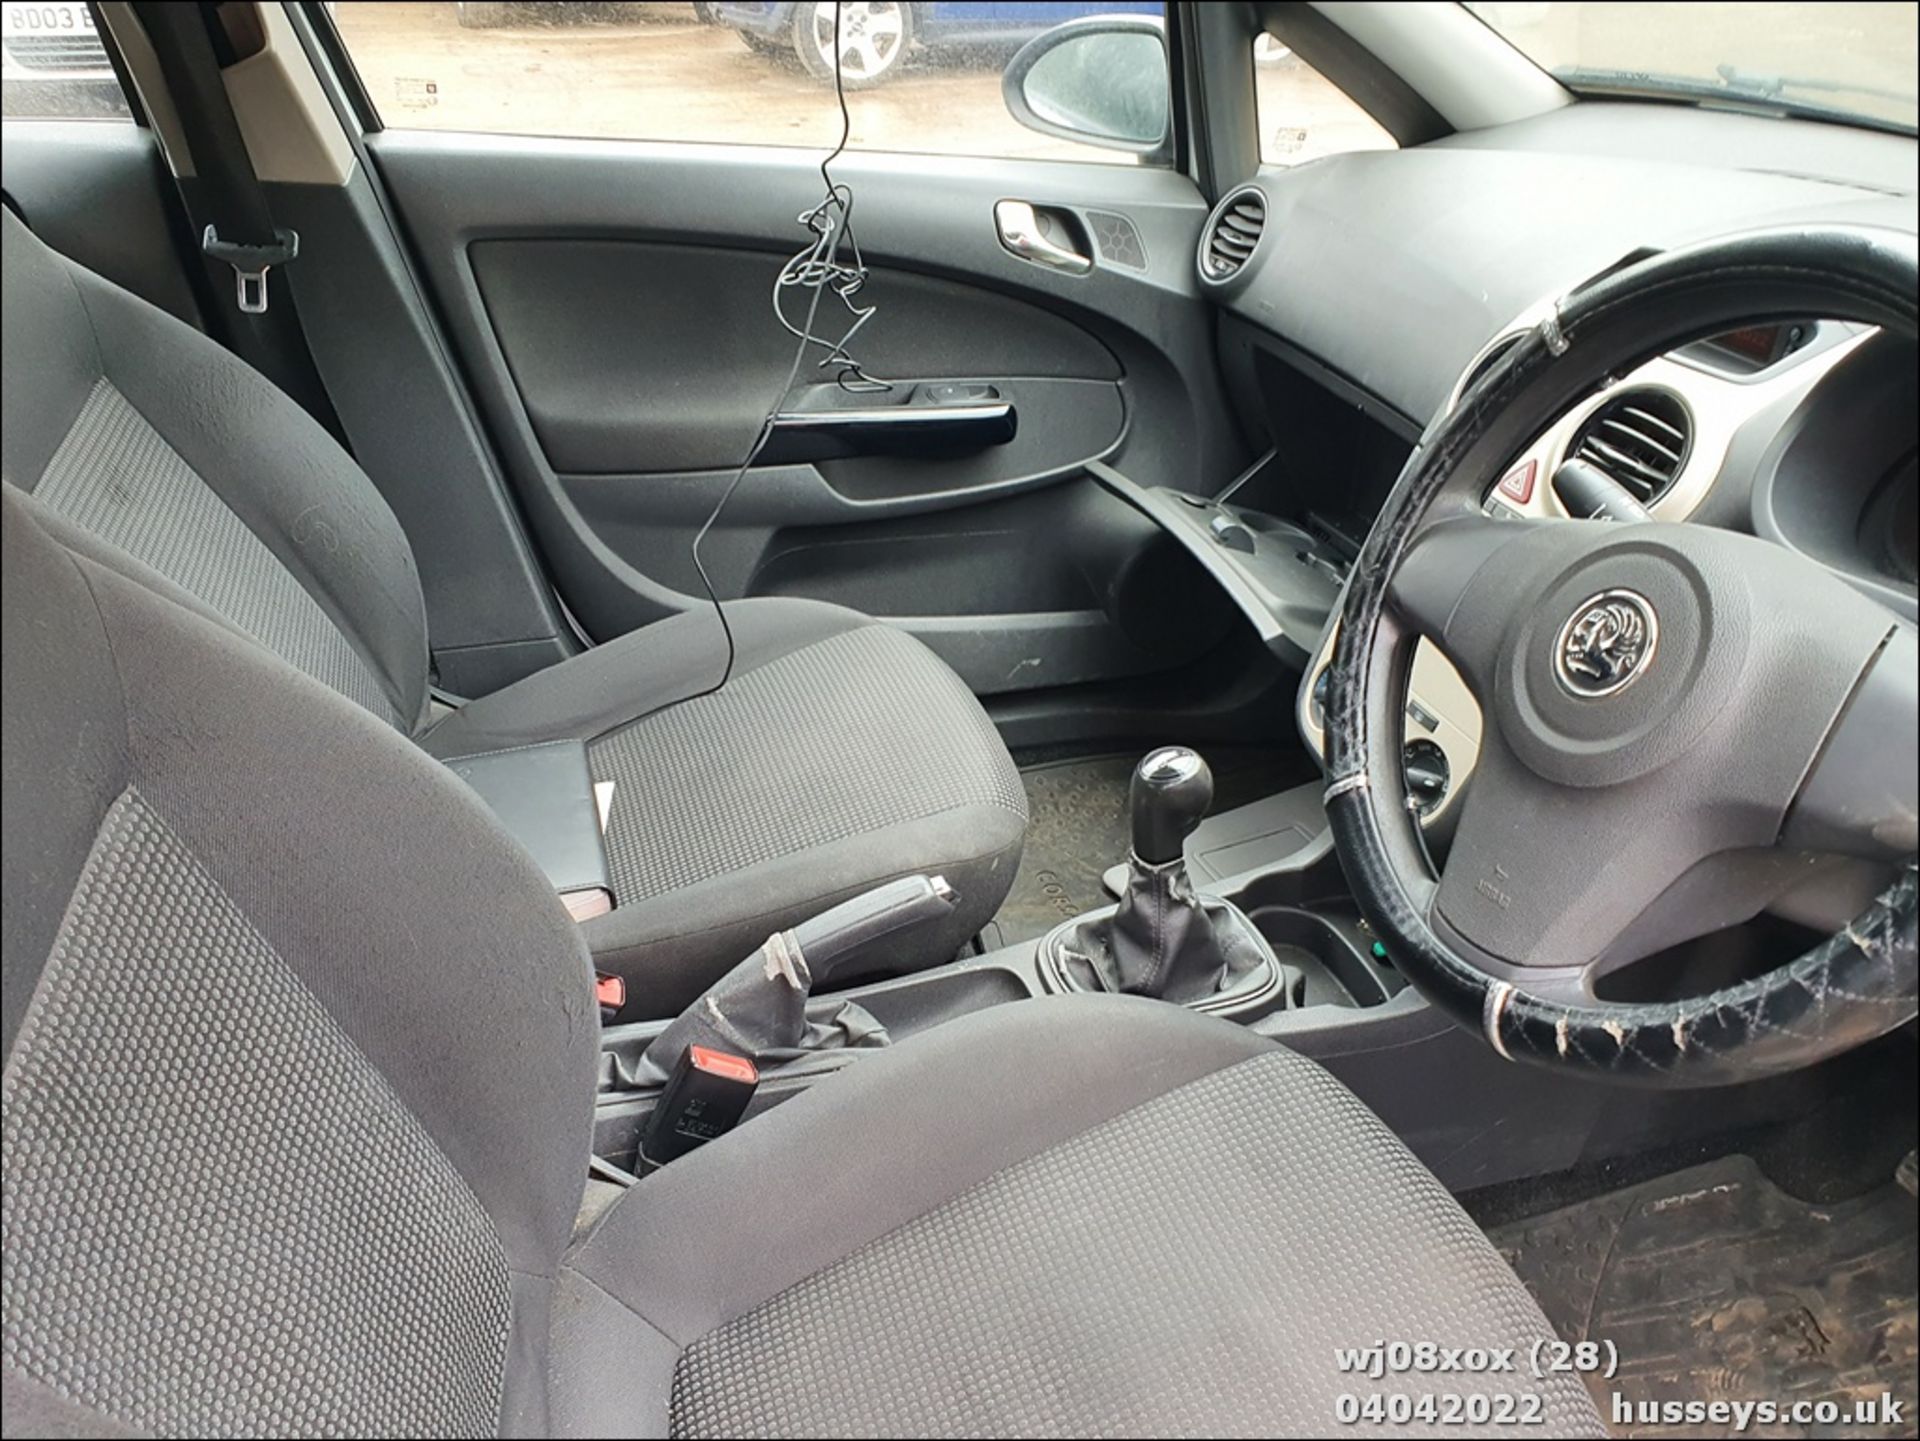 08/08 VAUXHALL CORSA LIFE CDTI - 1248cc 5dr Hatchback (White) - Image 28 of 52